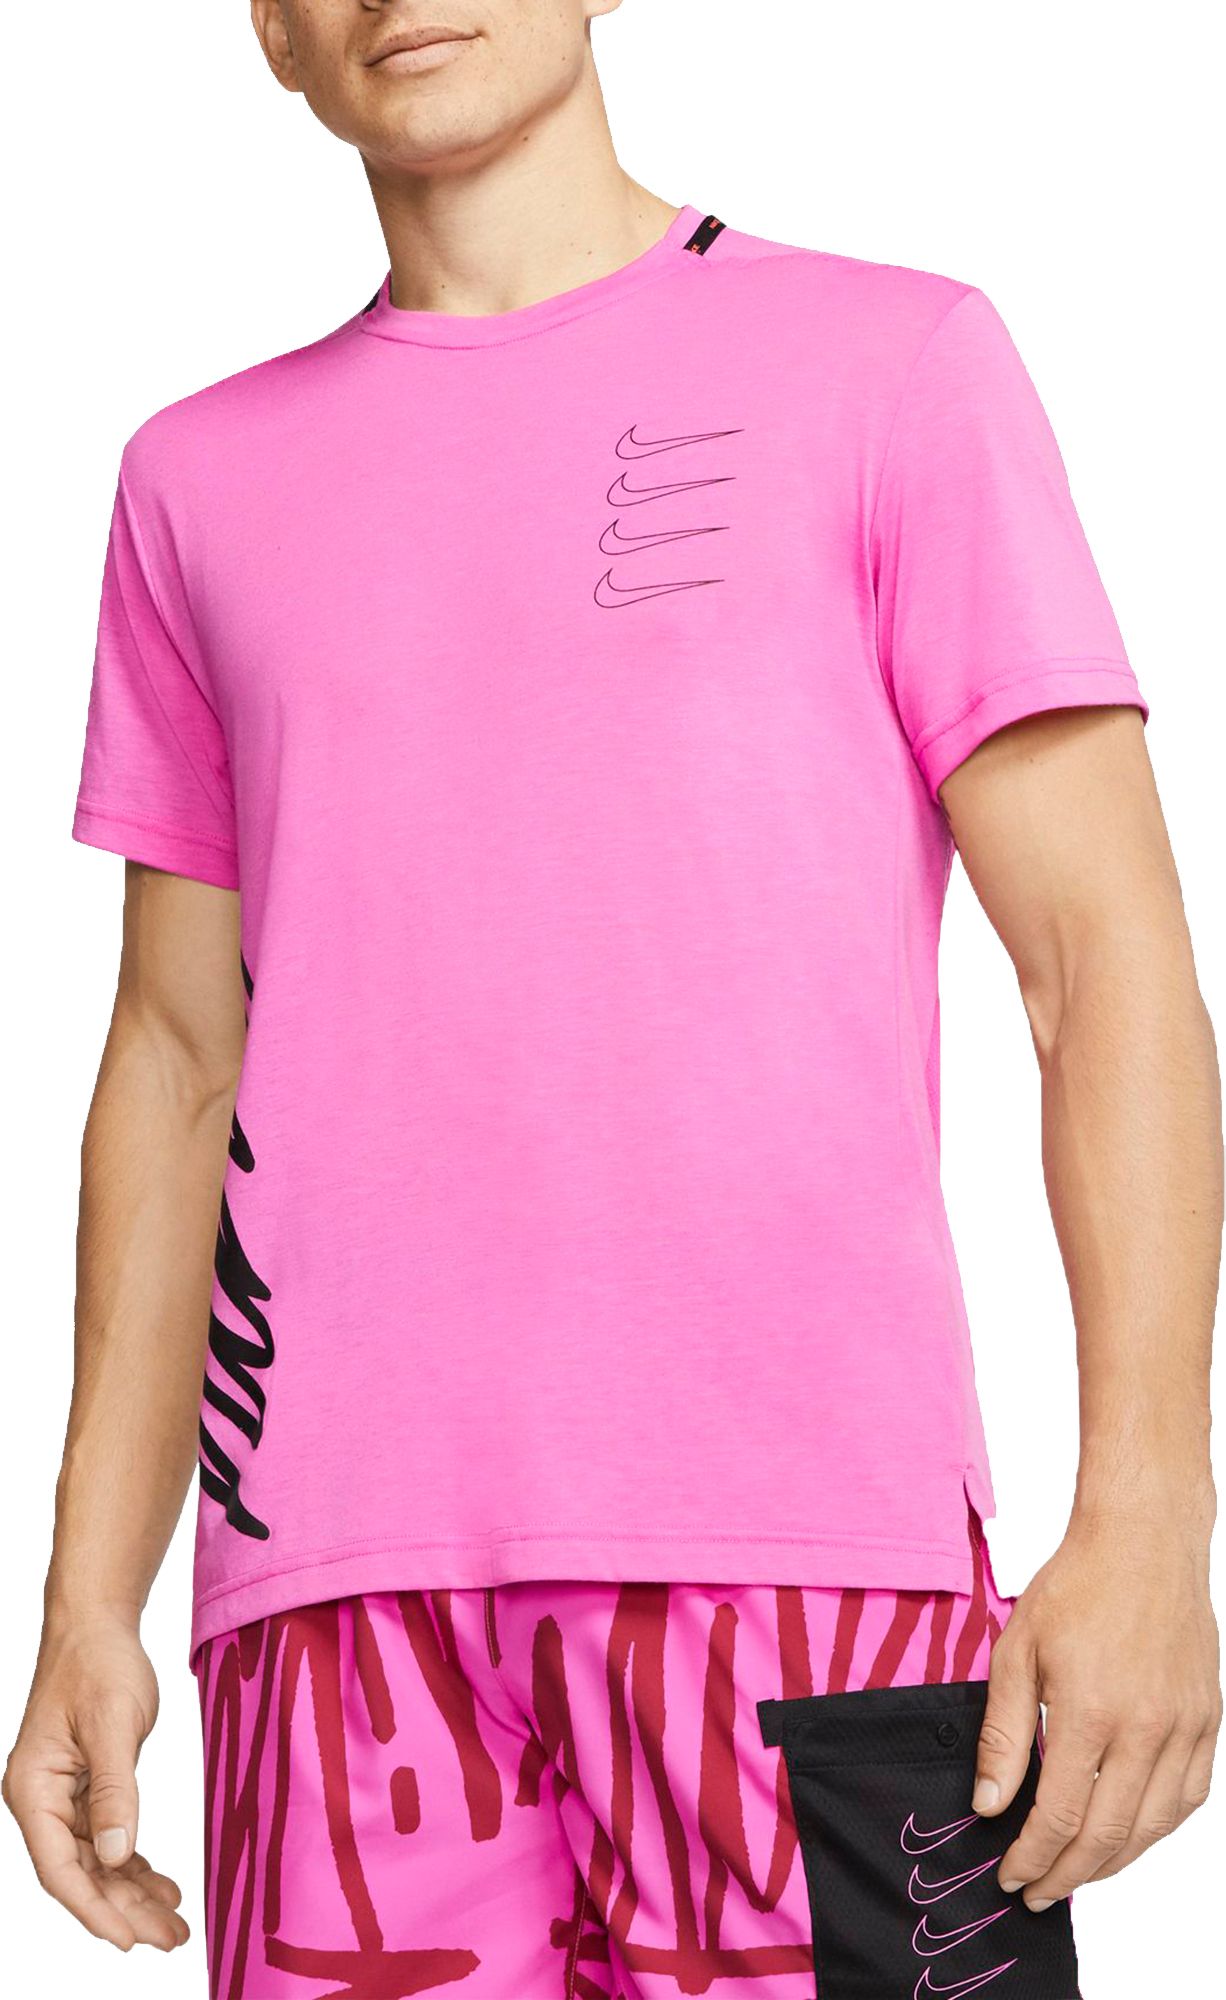 fuchsia pink nike shirt